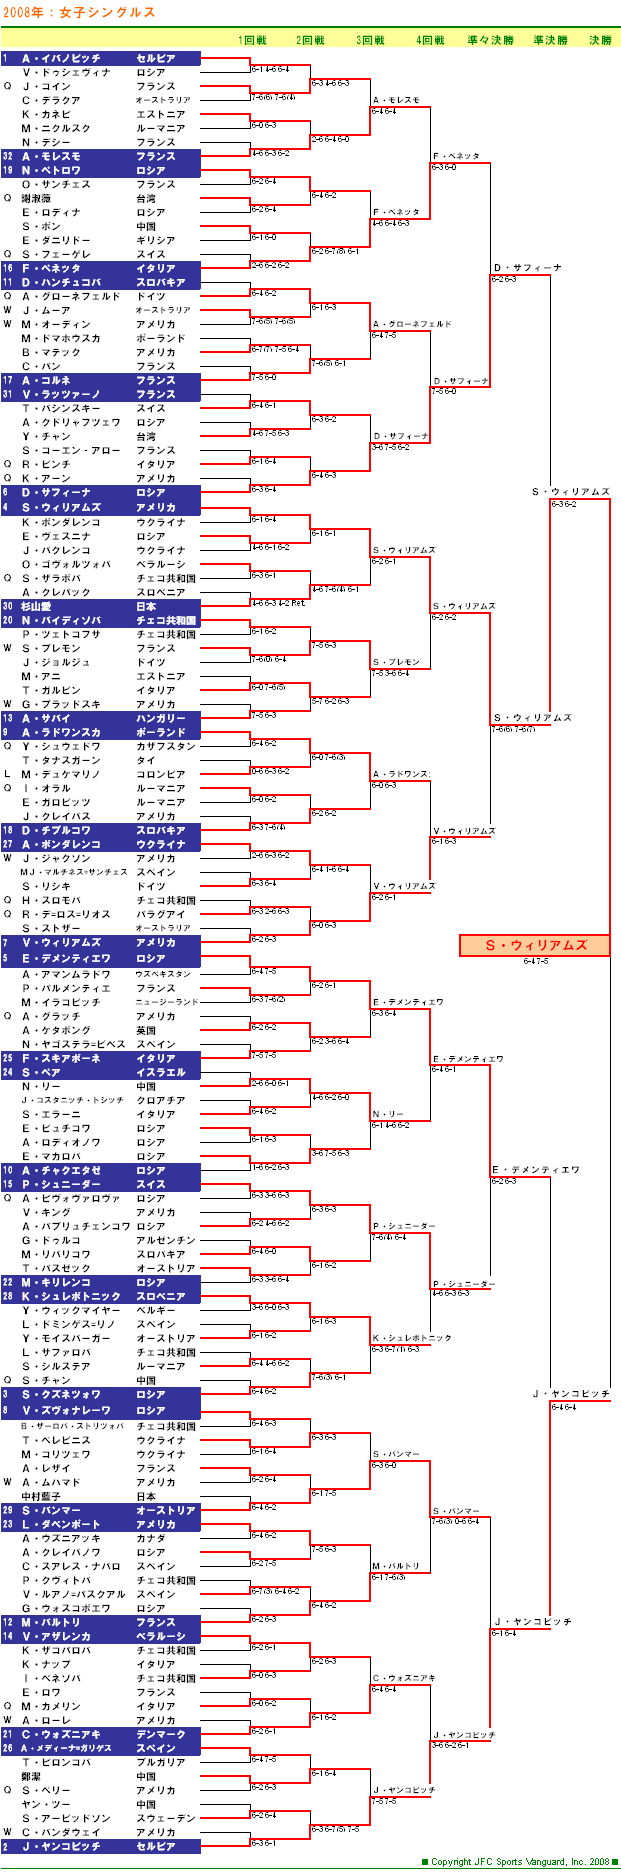 USオープンテニステニス2008　女子シングルスドロー表